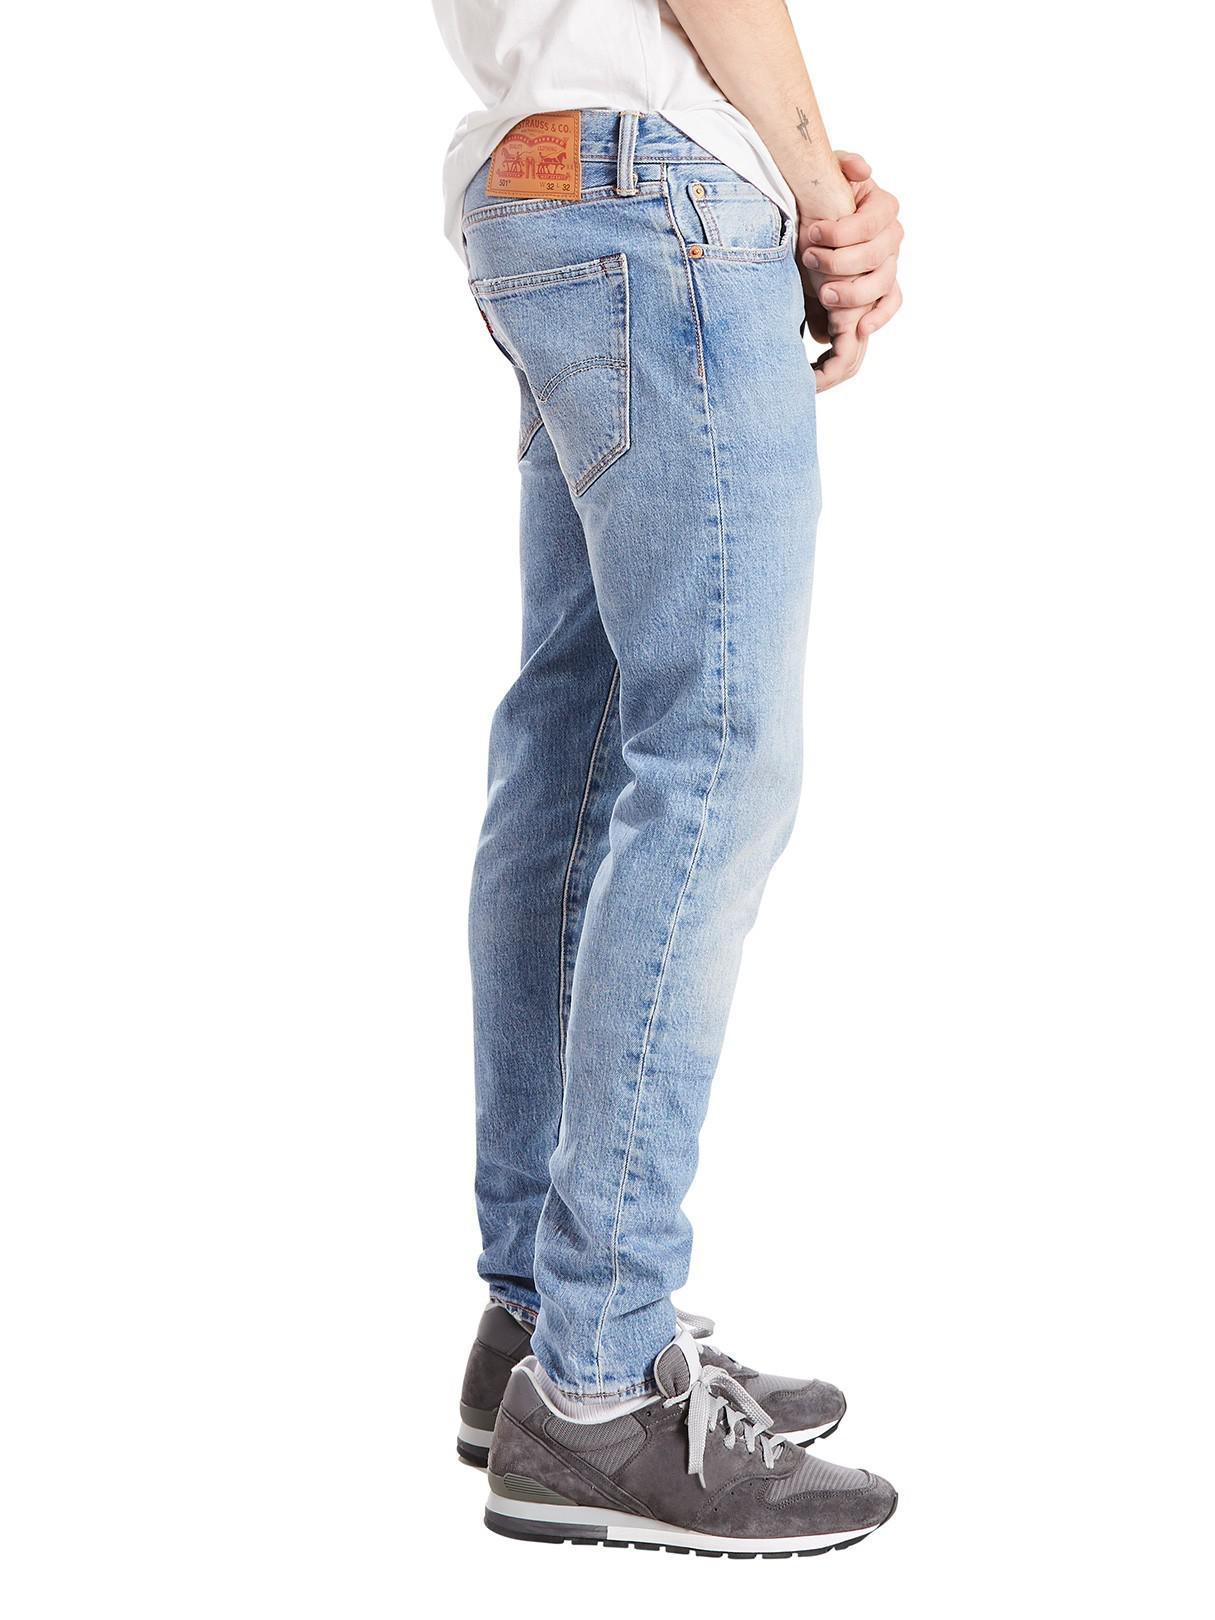 Levi's Denim West Coast 501 Skinny Jeans in Blue for Men - Lyst